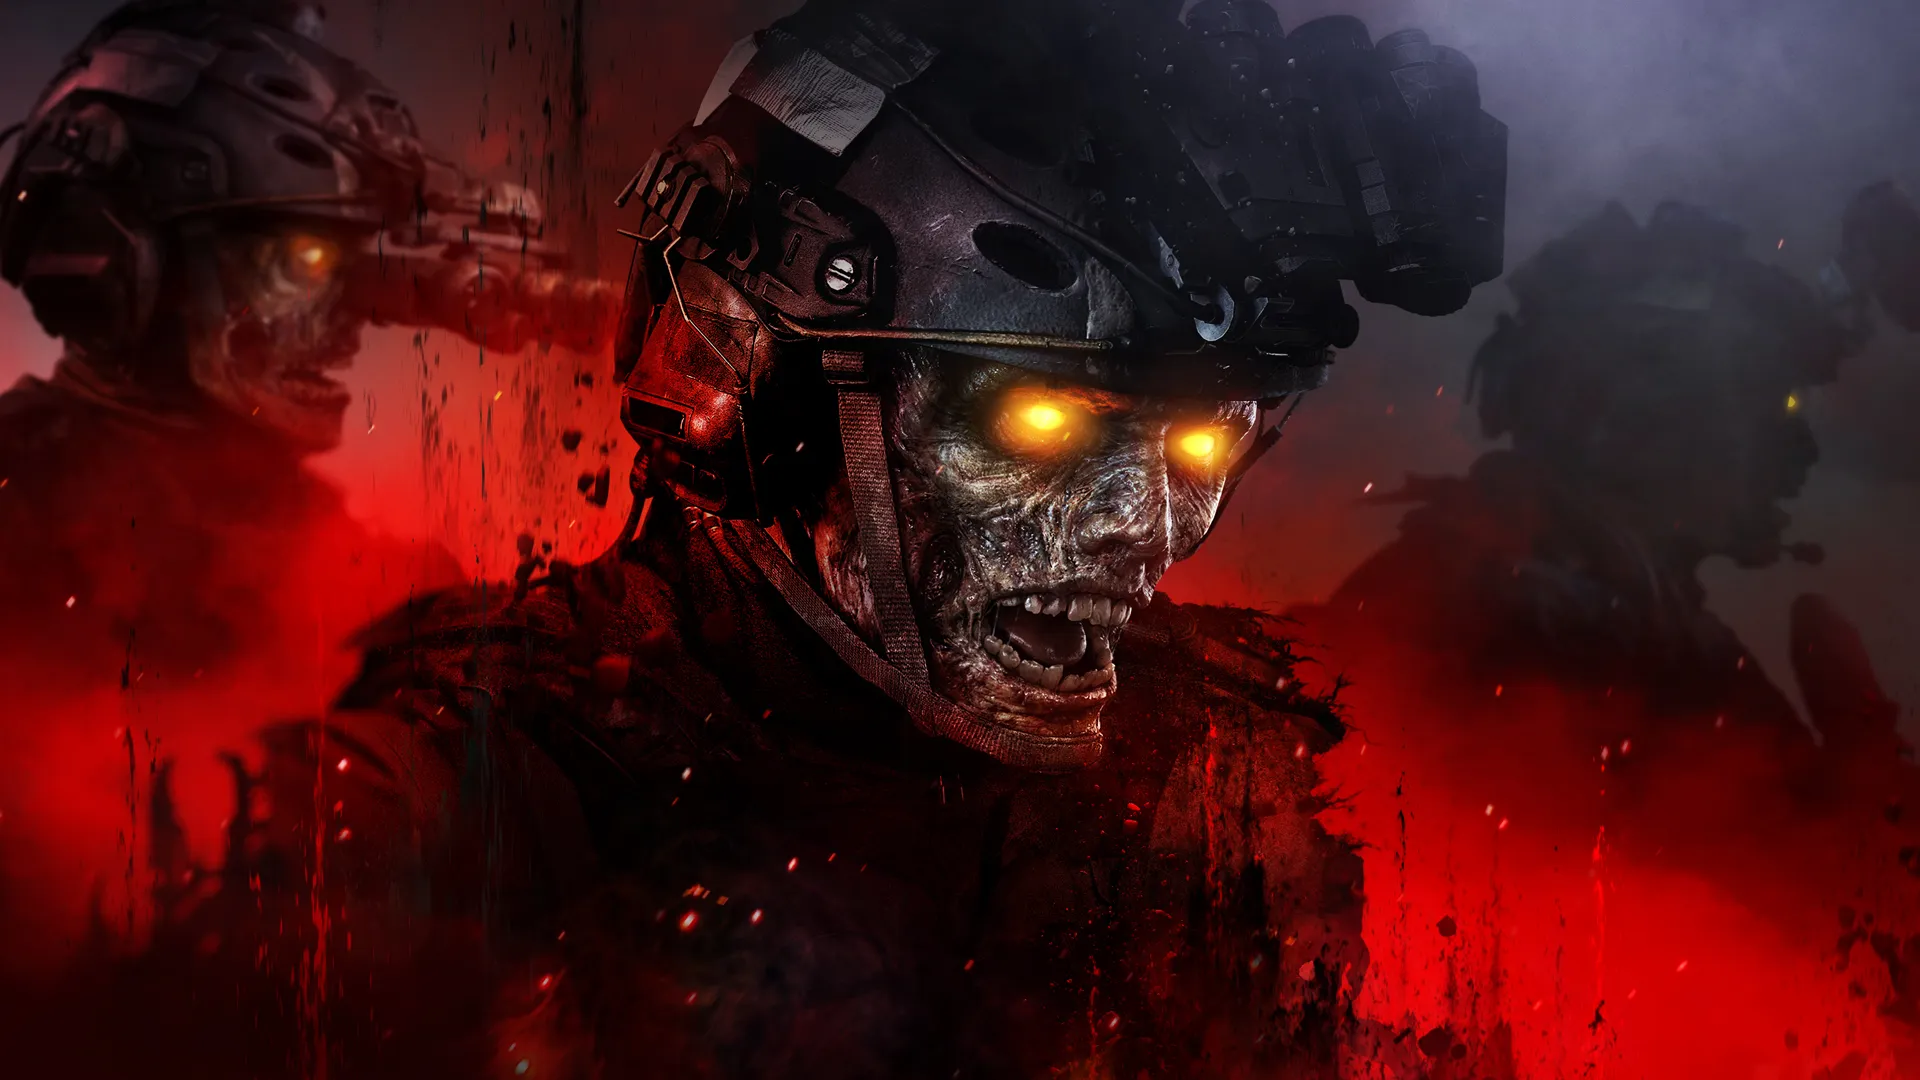 CoD: Modern Warfare 3 And Warzone Season 1 Release Date And